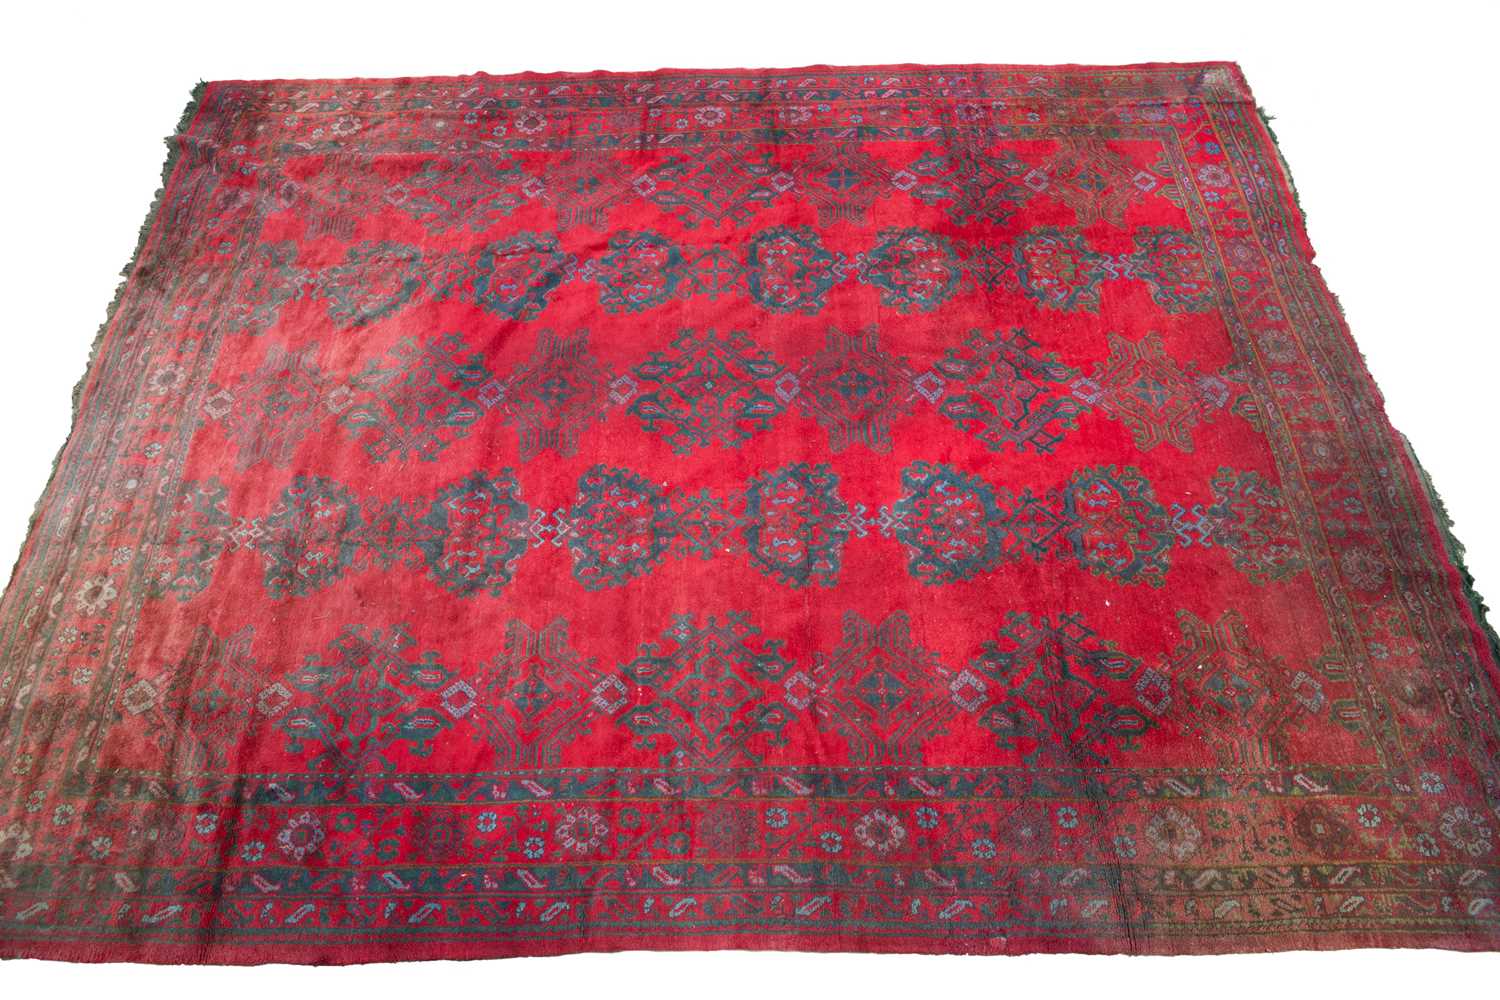 A large red ground Turkey Oushak carpet, 487cm x 383cm